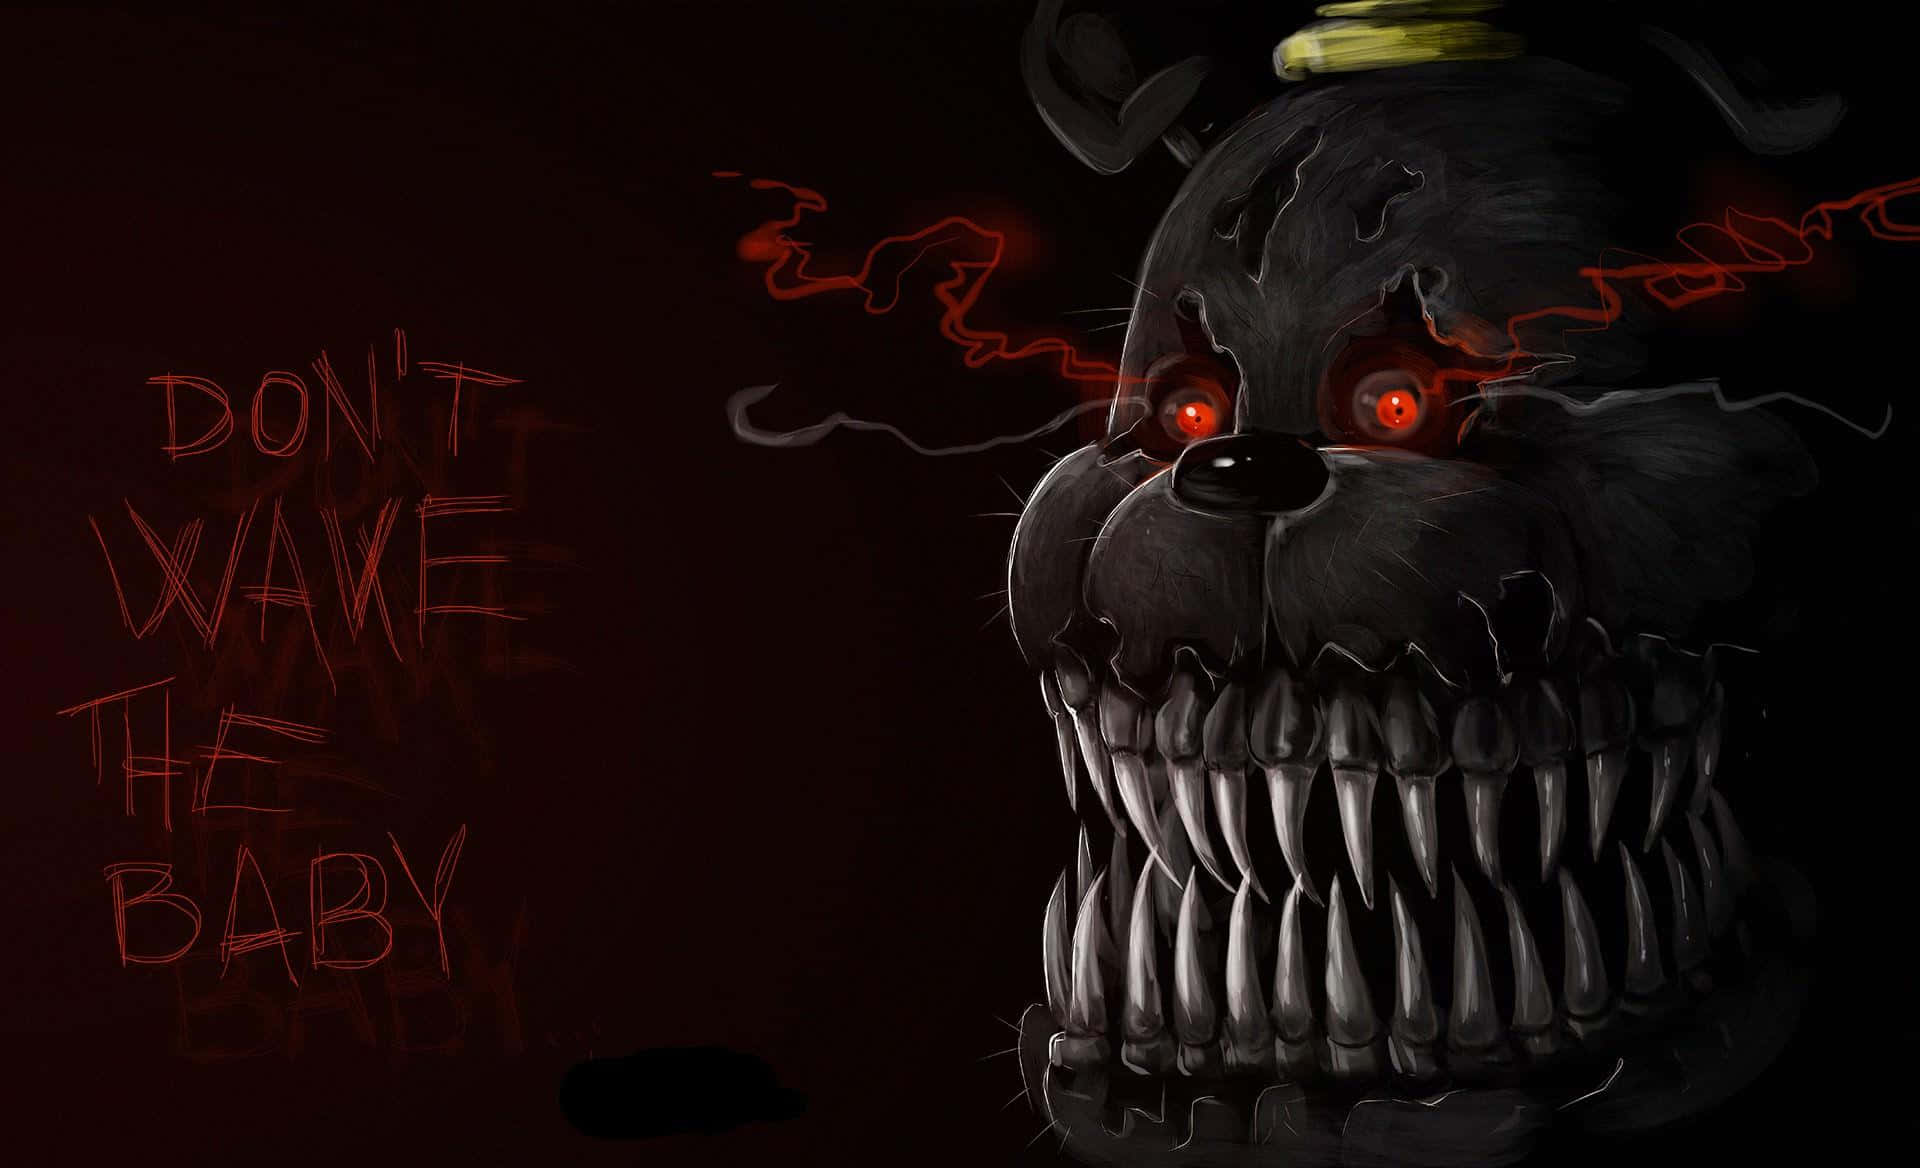  Five Nights At Freddy’s 4 Hintergrundbild 1920x1168. Download Five Nights At Freddy's't Wake The Baby Wallpaper